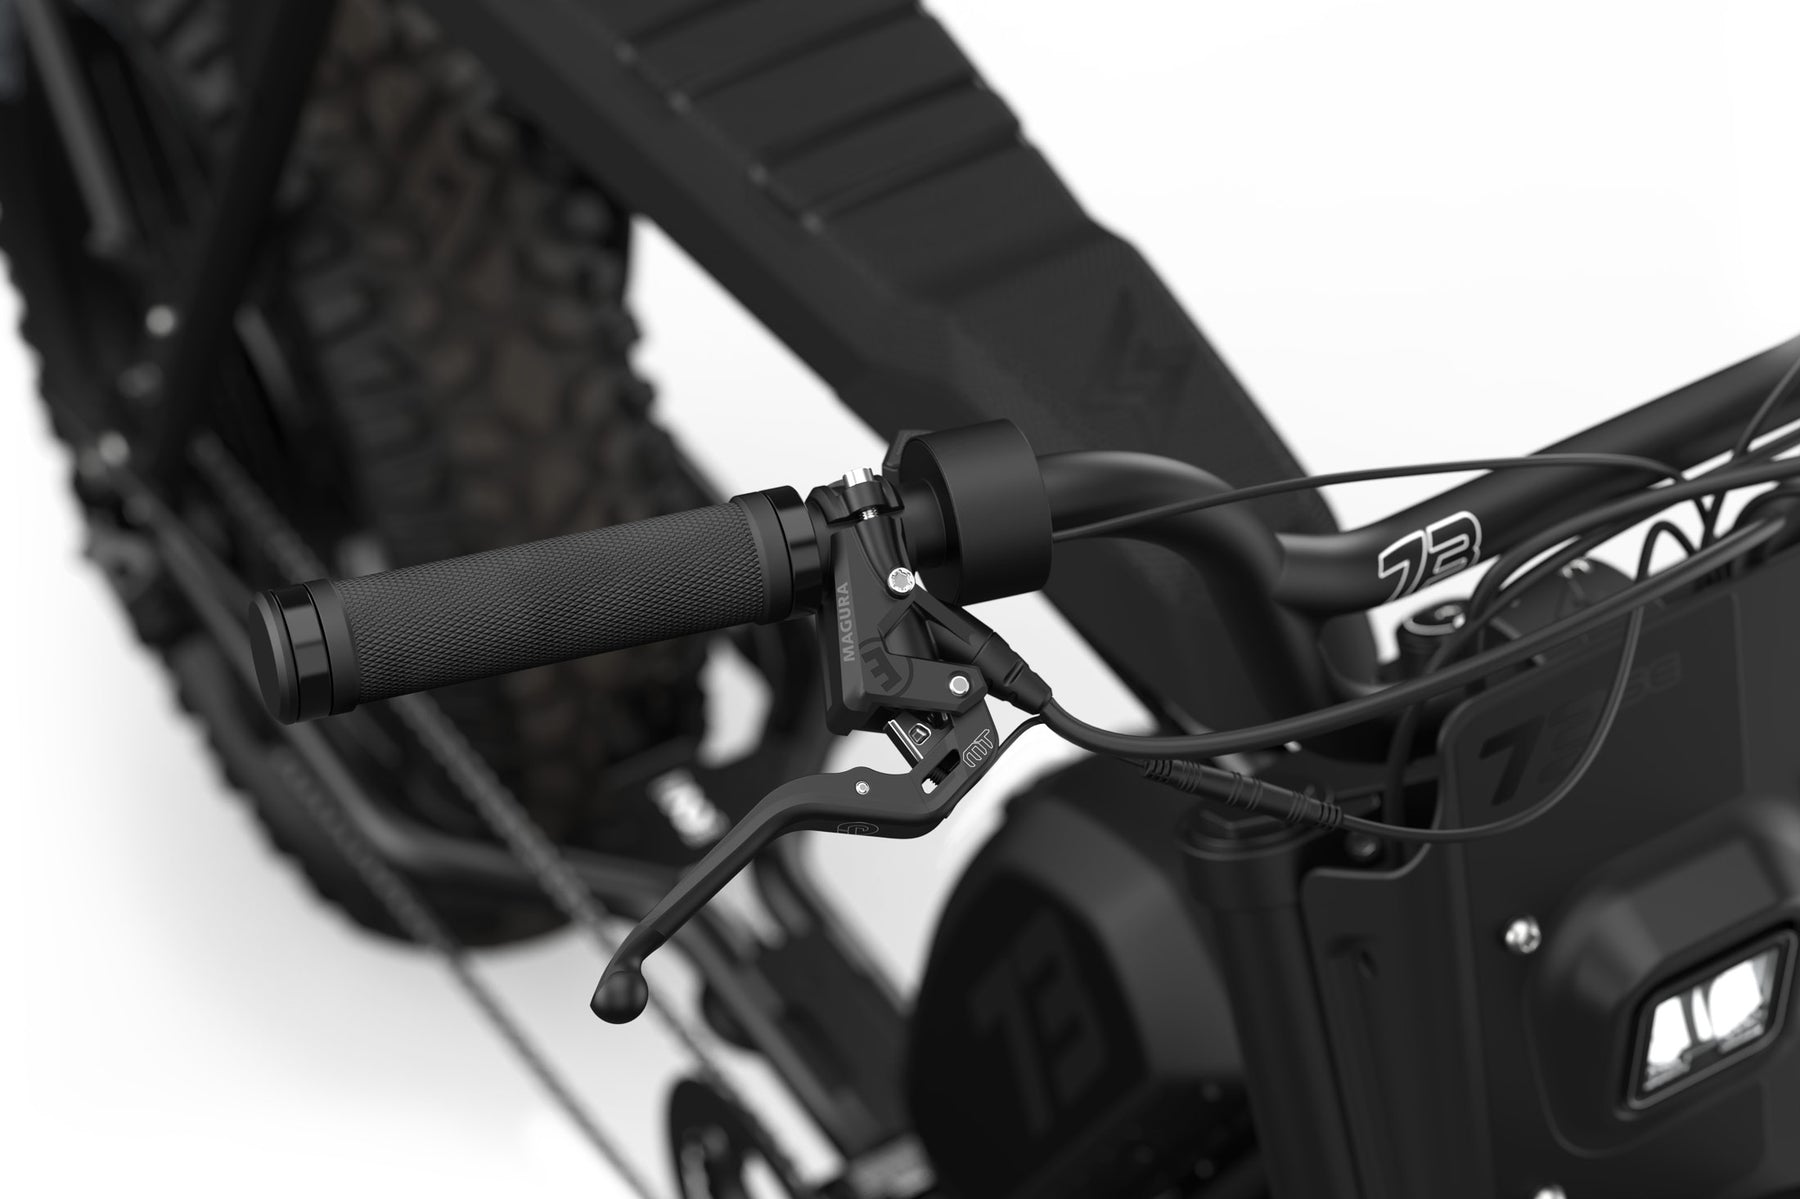 Detail shot of the Magura brake system on the SUPER73-S Blackout SE bike.